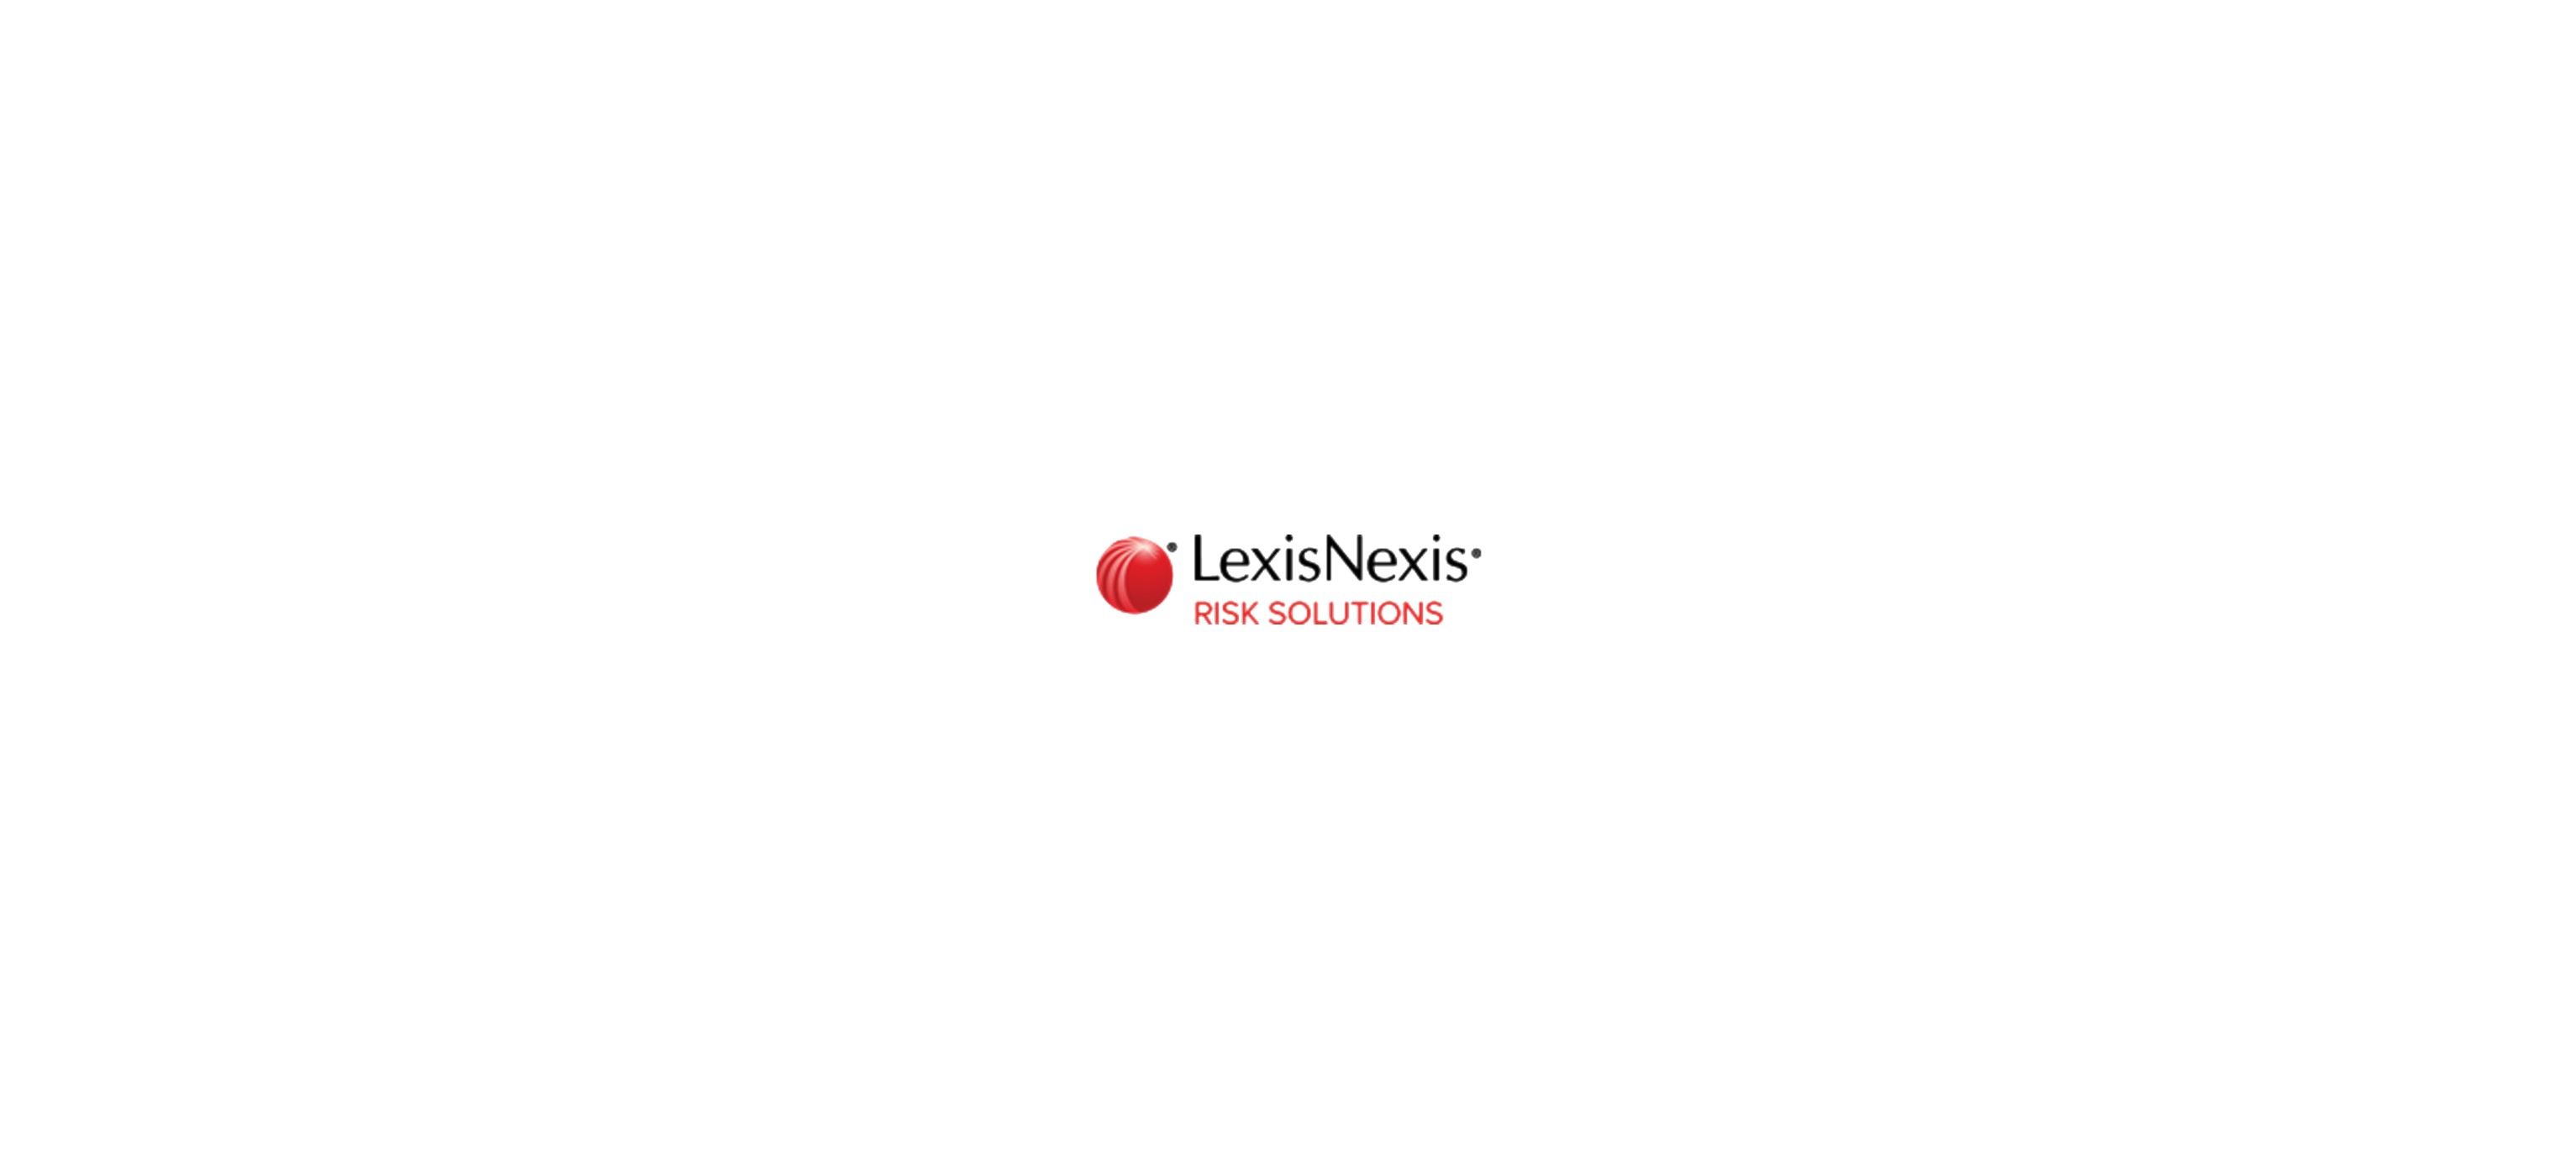 NLEX Announces Partnership With LexisNexis Risk Solutions